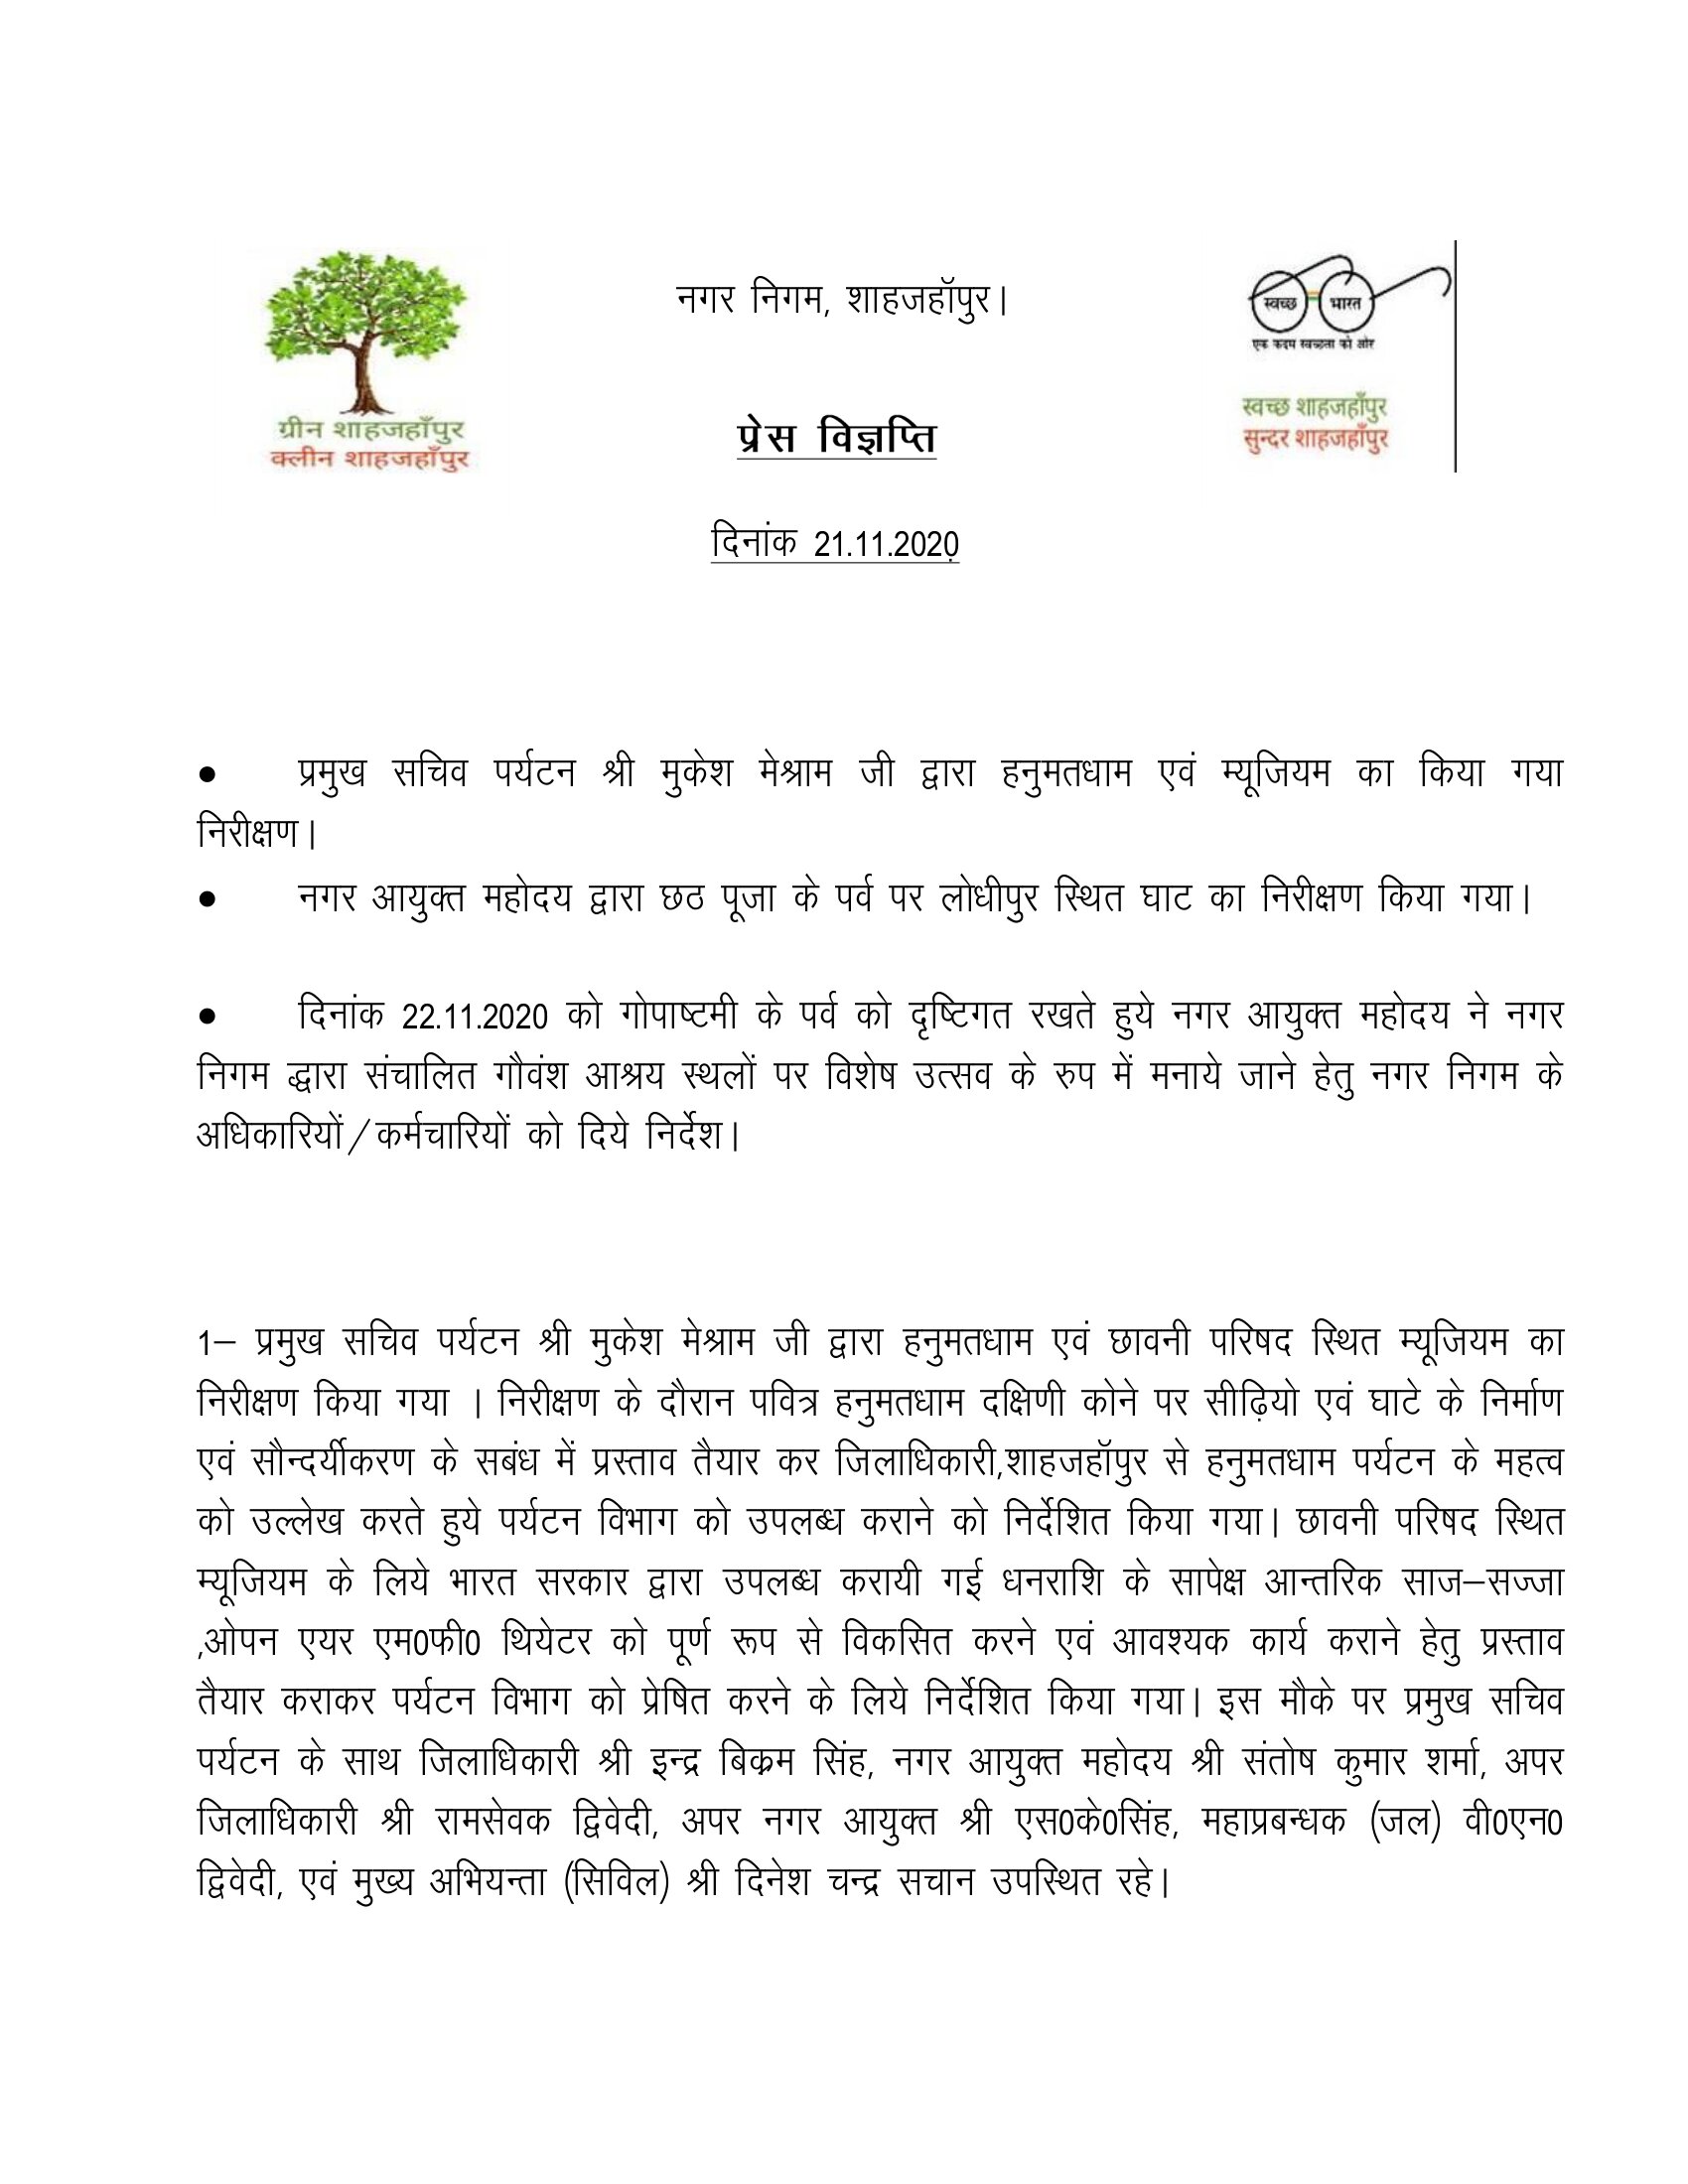 Regarding inspection of Hanumat Dham and Museum on 21.11.2020 by Shri Mukesh Meshram, Principal Secretary, UP Tourism